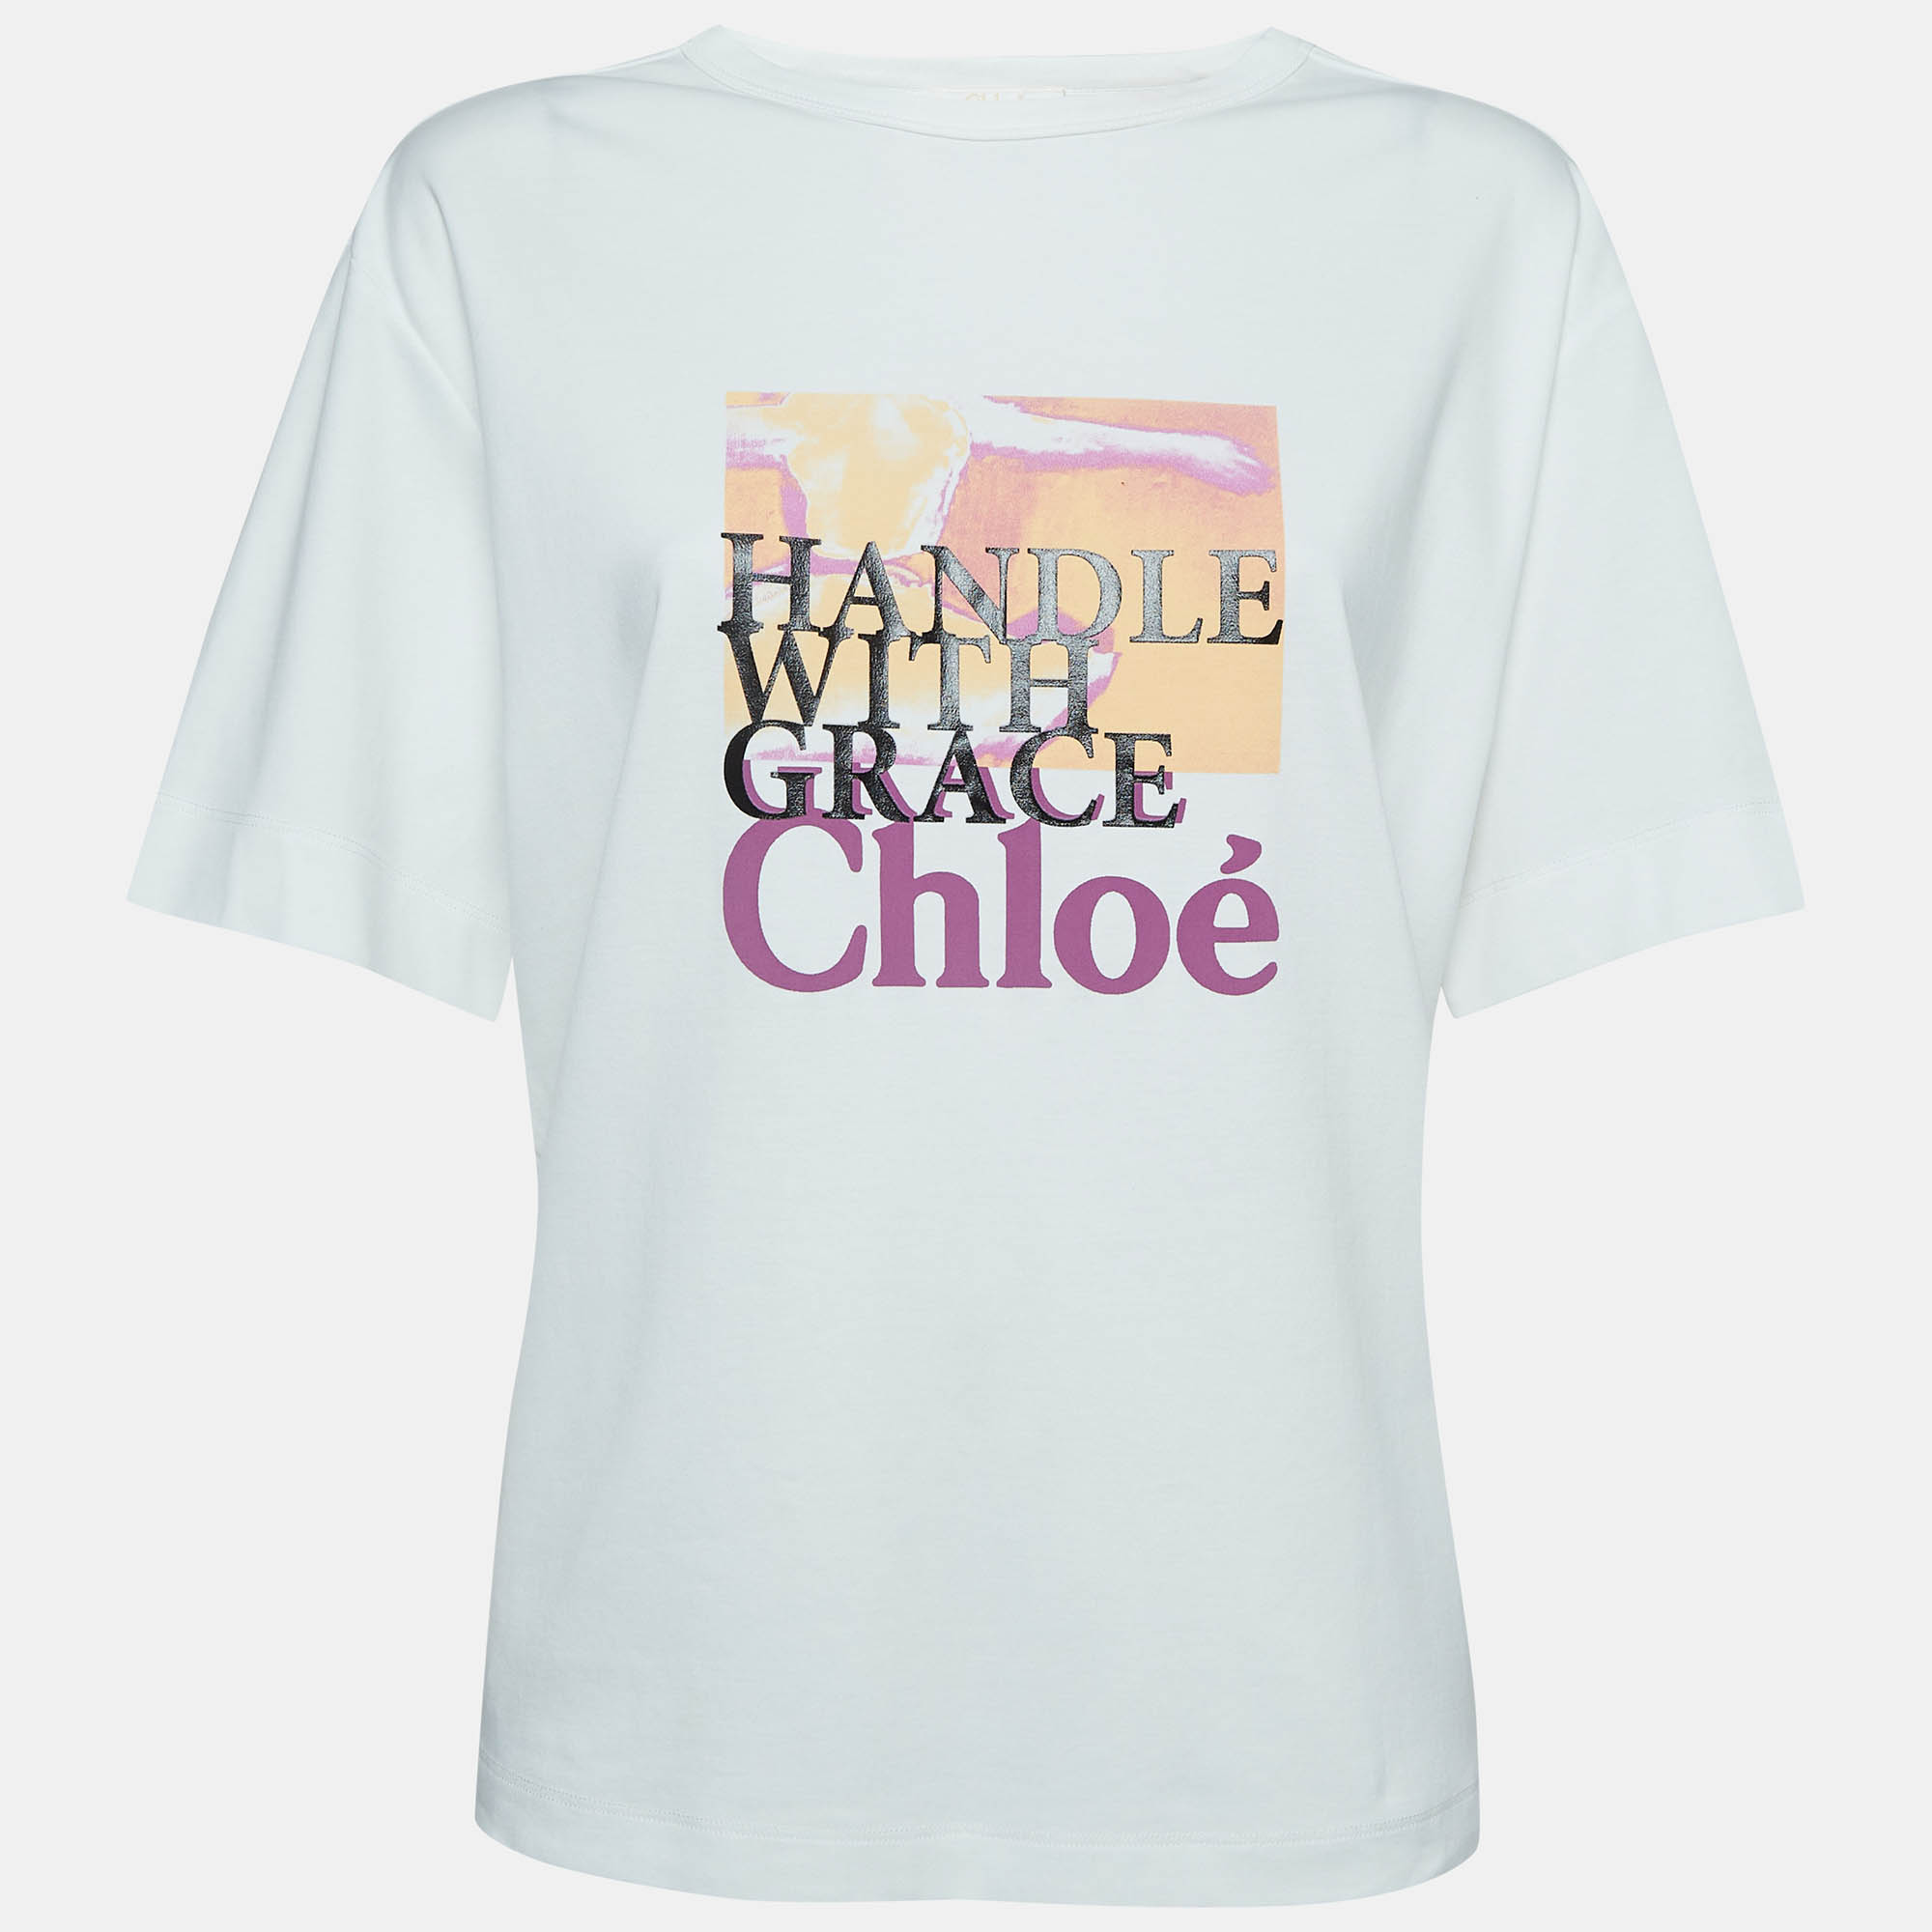 Chloe white graphic printed cotton t-shirt xs